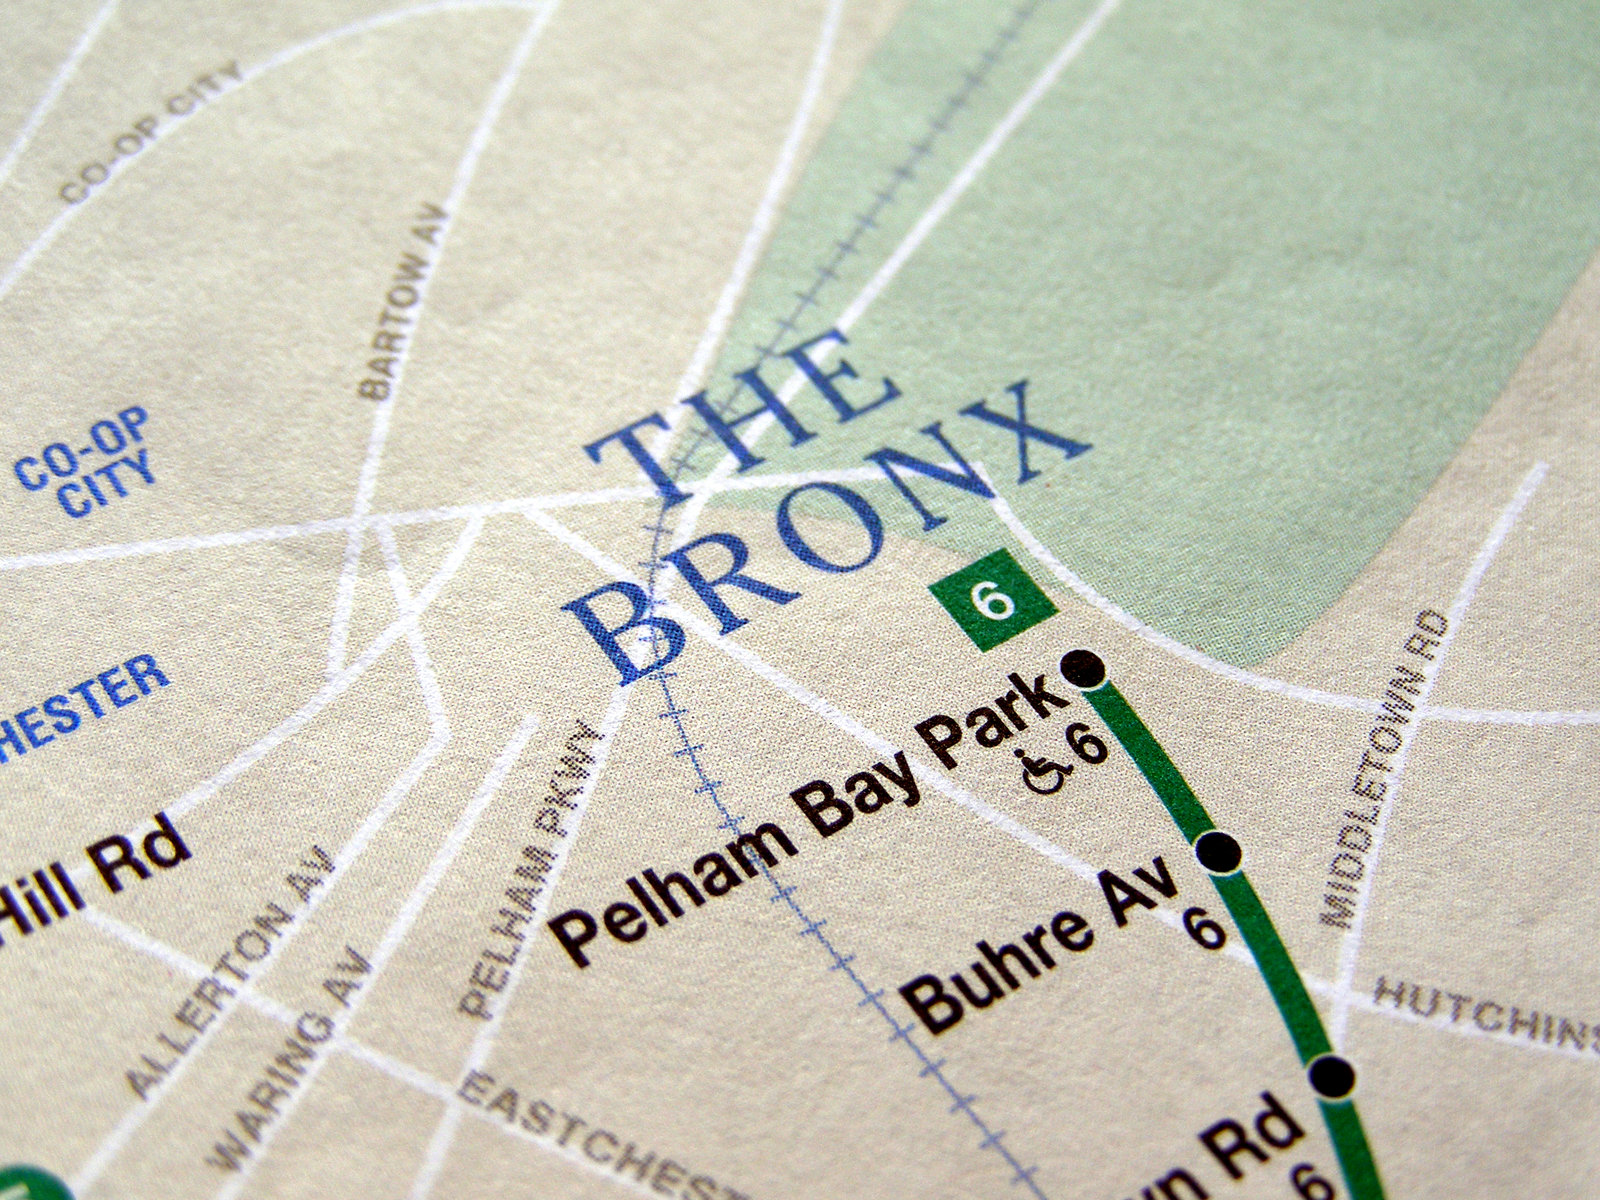 East Tremont Bronx, NY Private Investigator